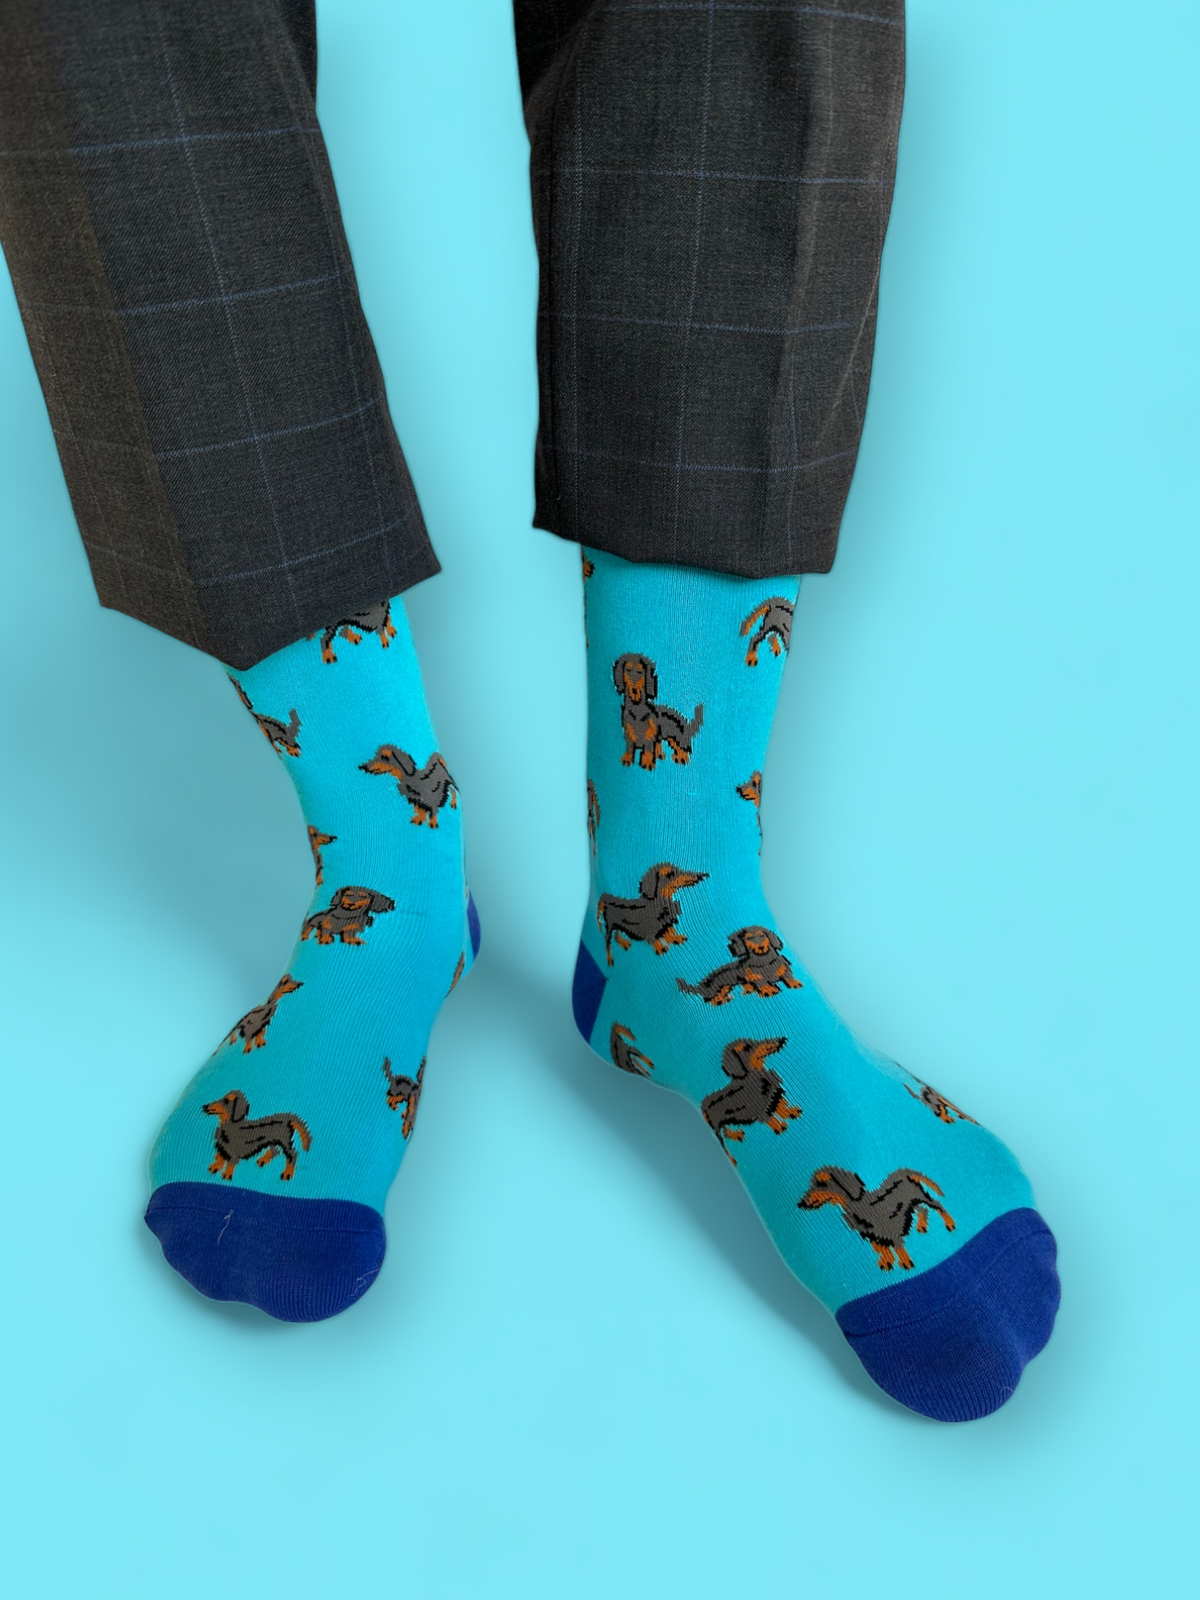 Best Colorful Socks - Dachshund Socks